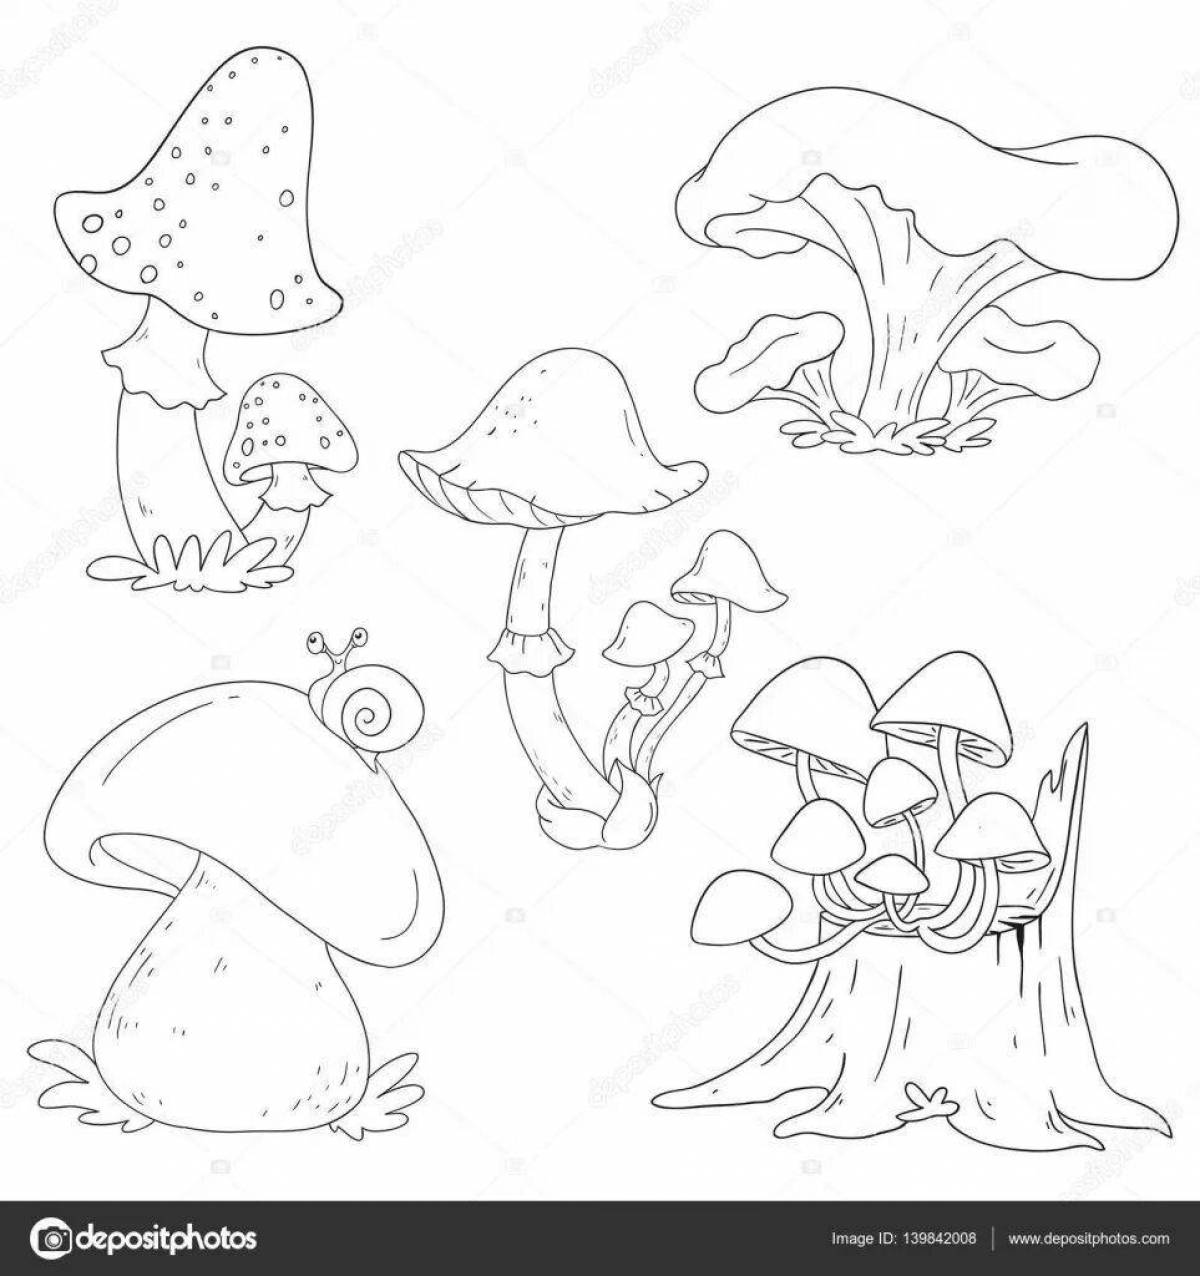 Edible mushroom coloring page